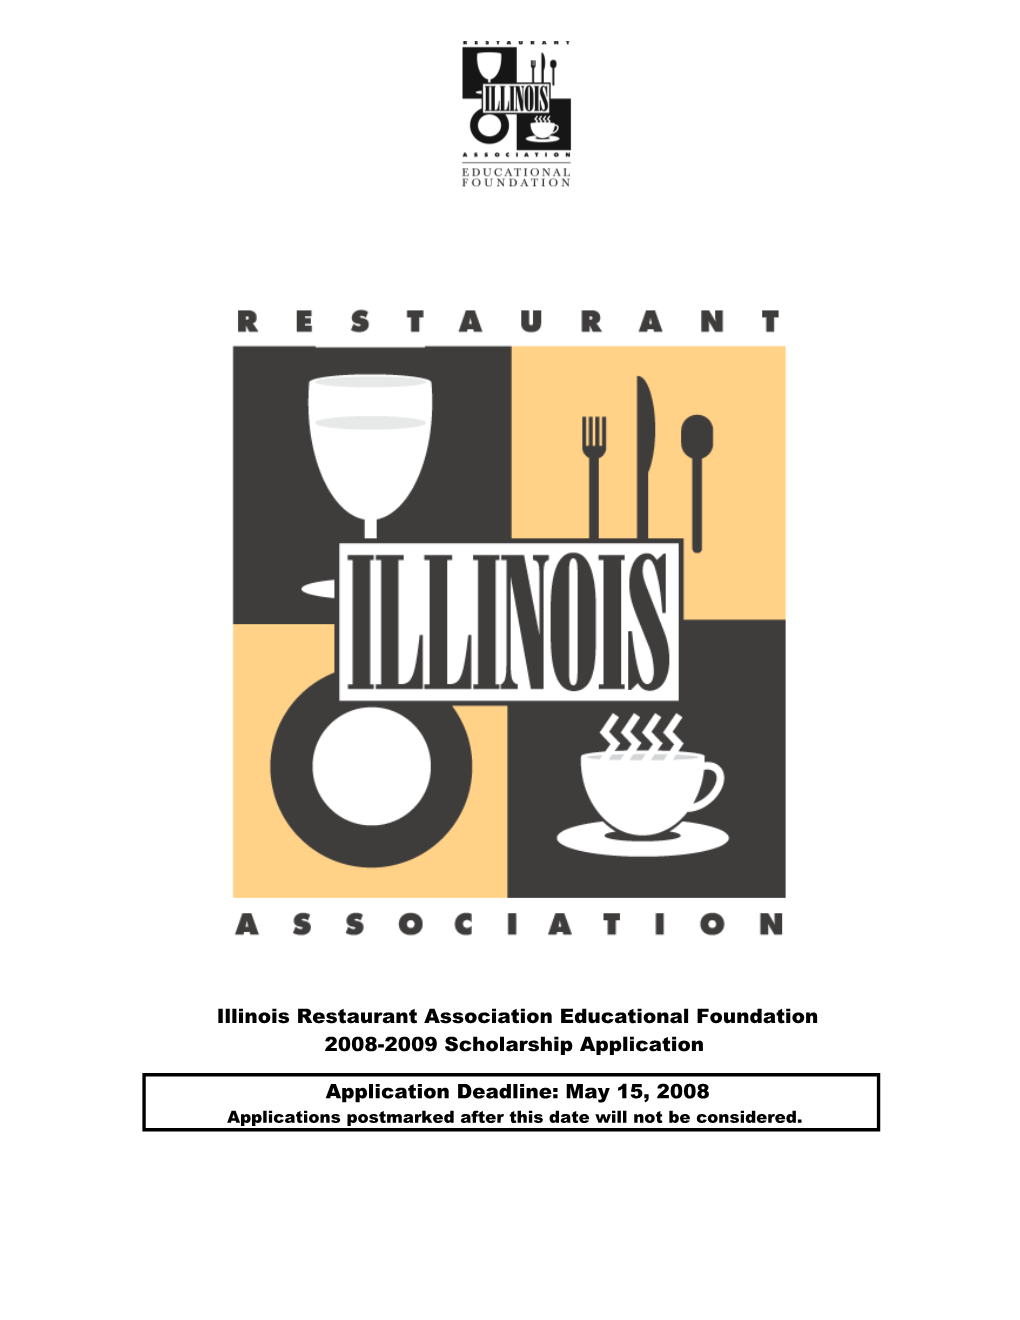 Illinois Restaurant Association Educational Foundation